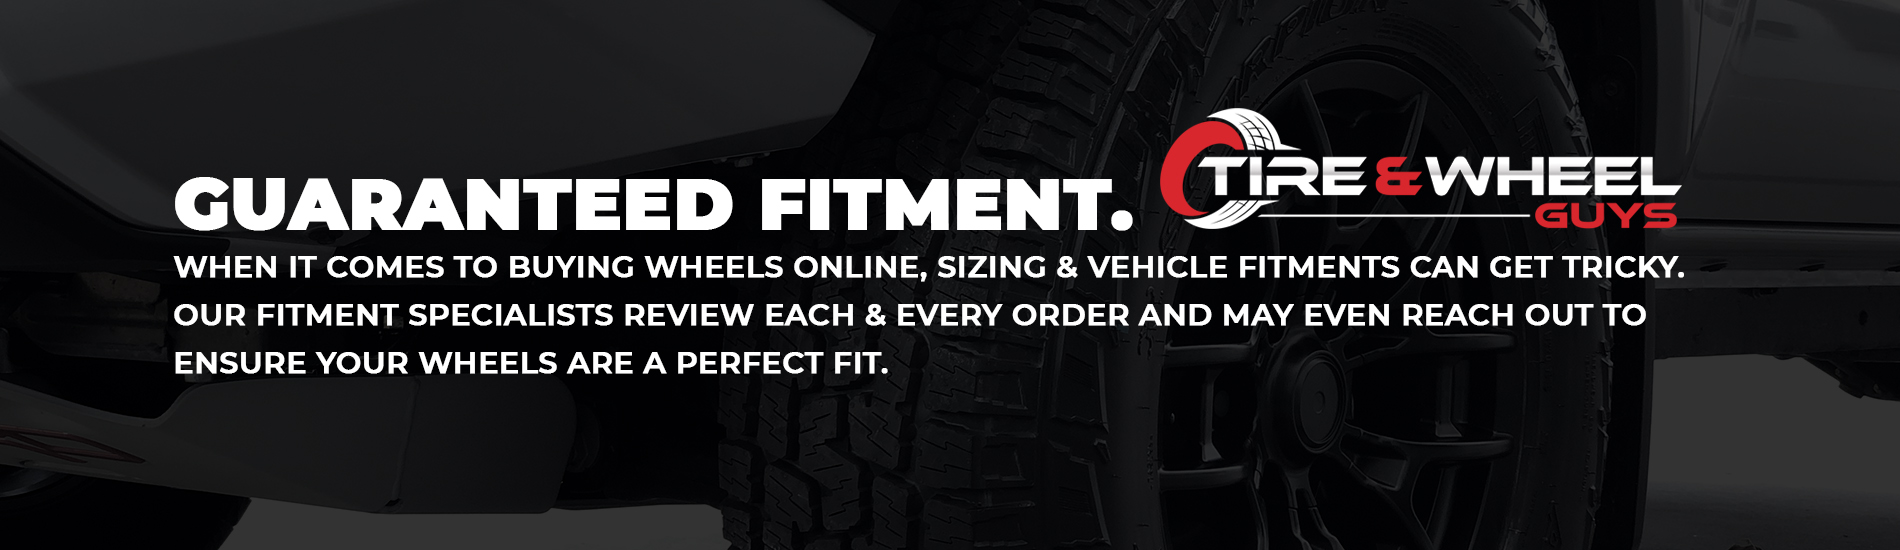 Tire & Wheel Guys Guaranteed Fitment